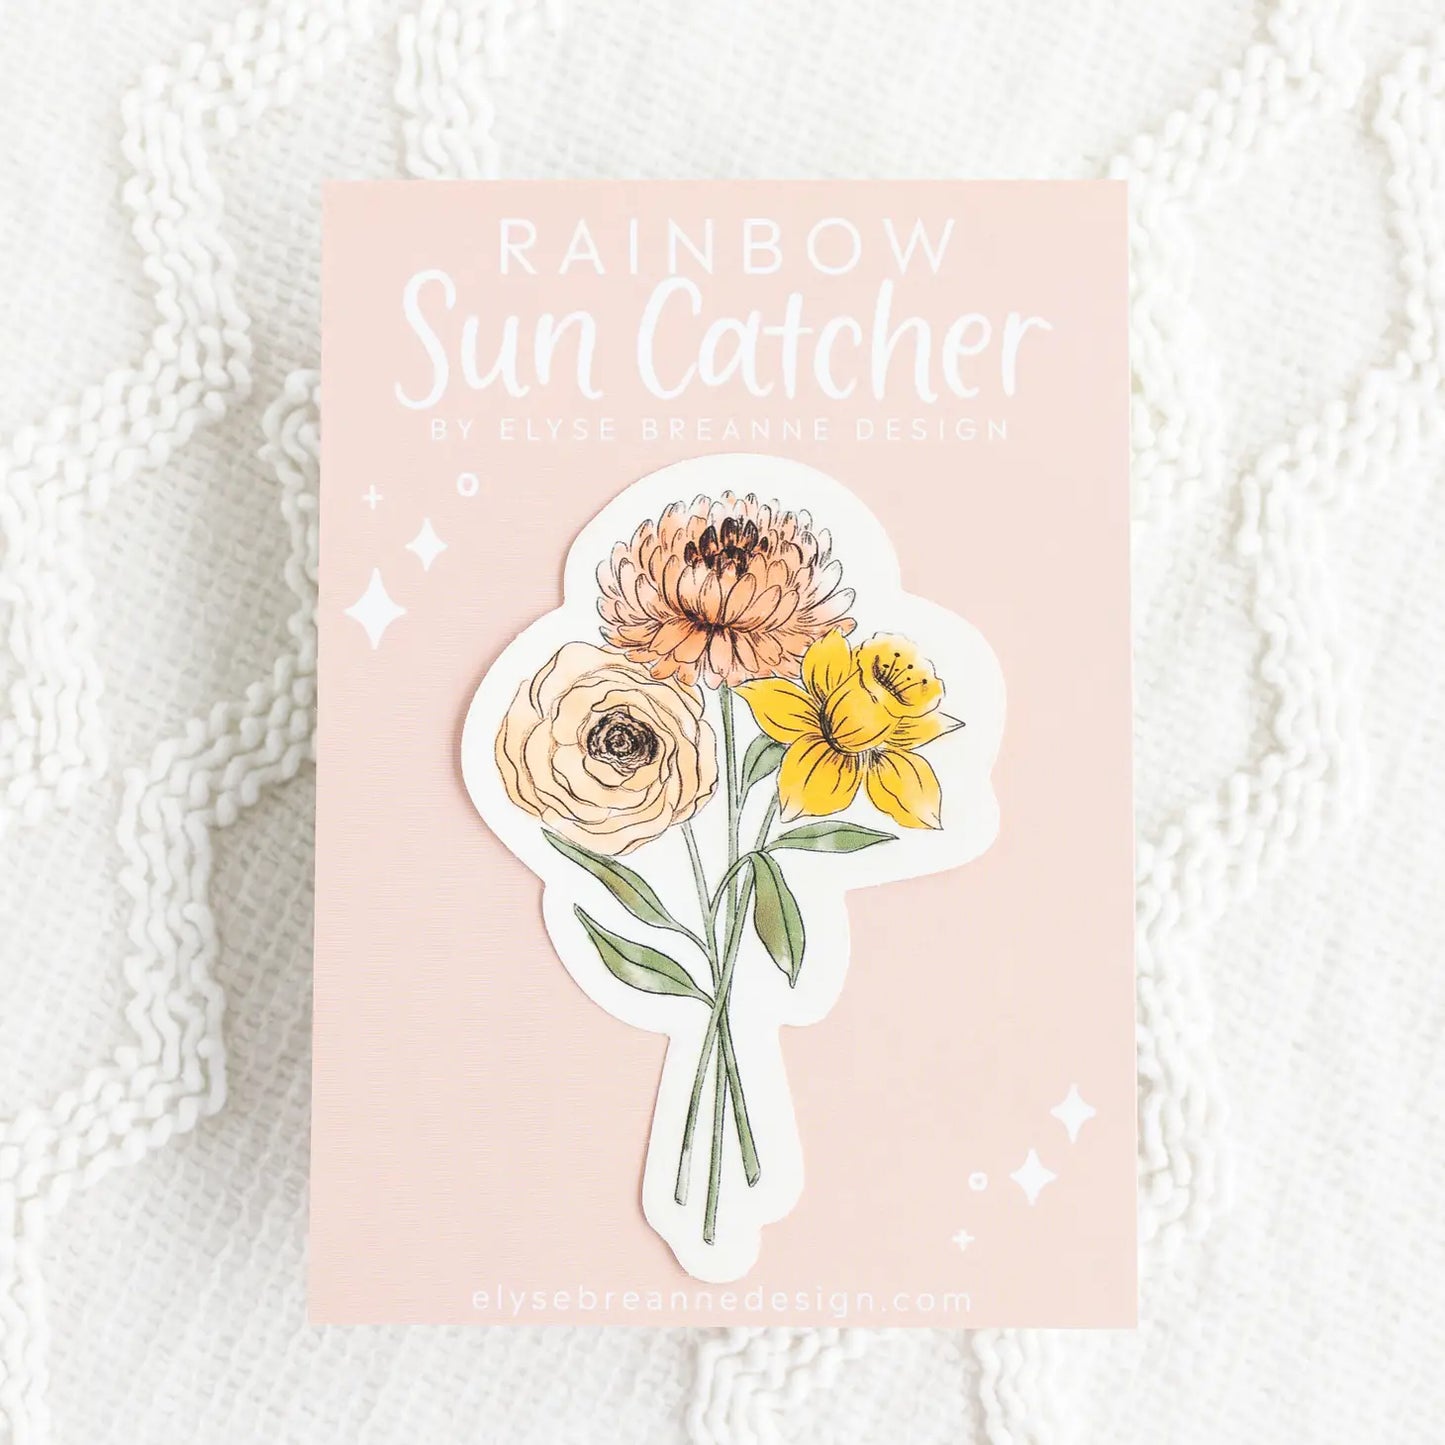 Daffodil and Chrysanthemum Sun Catcher